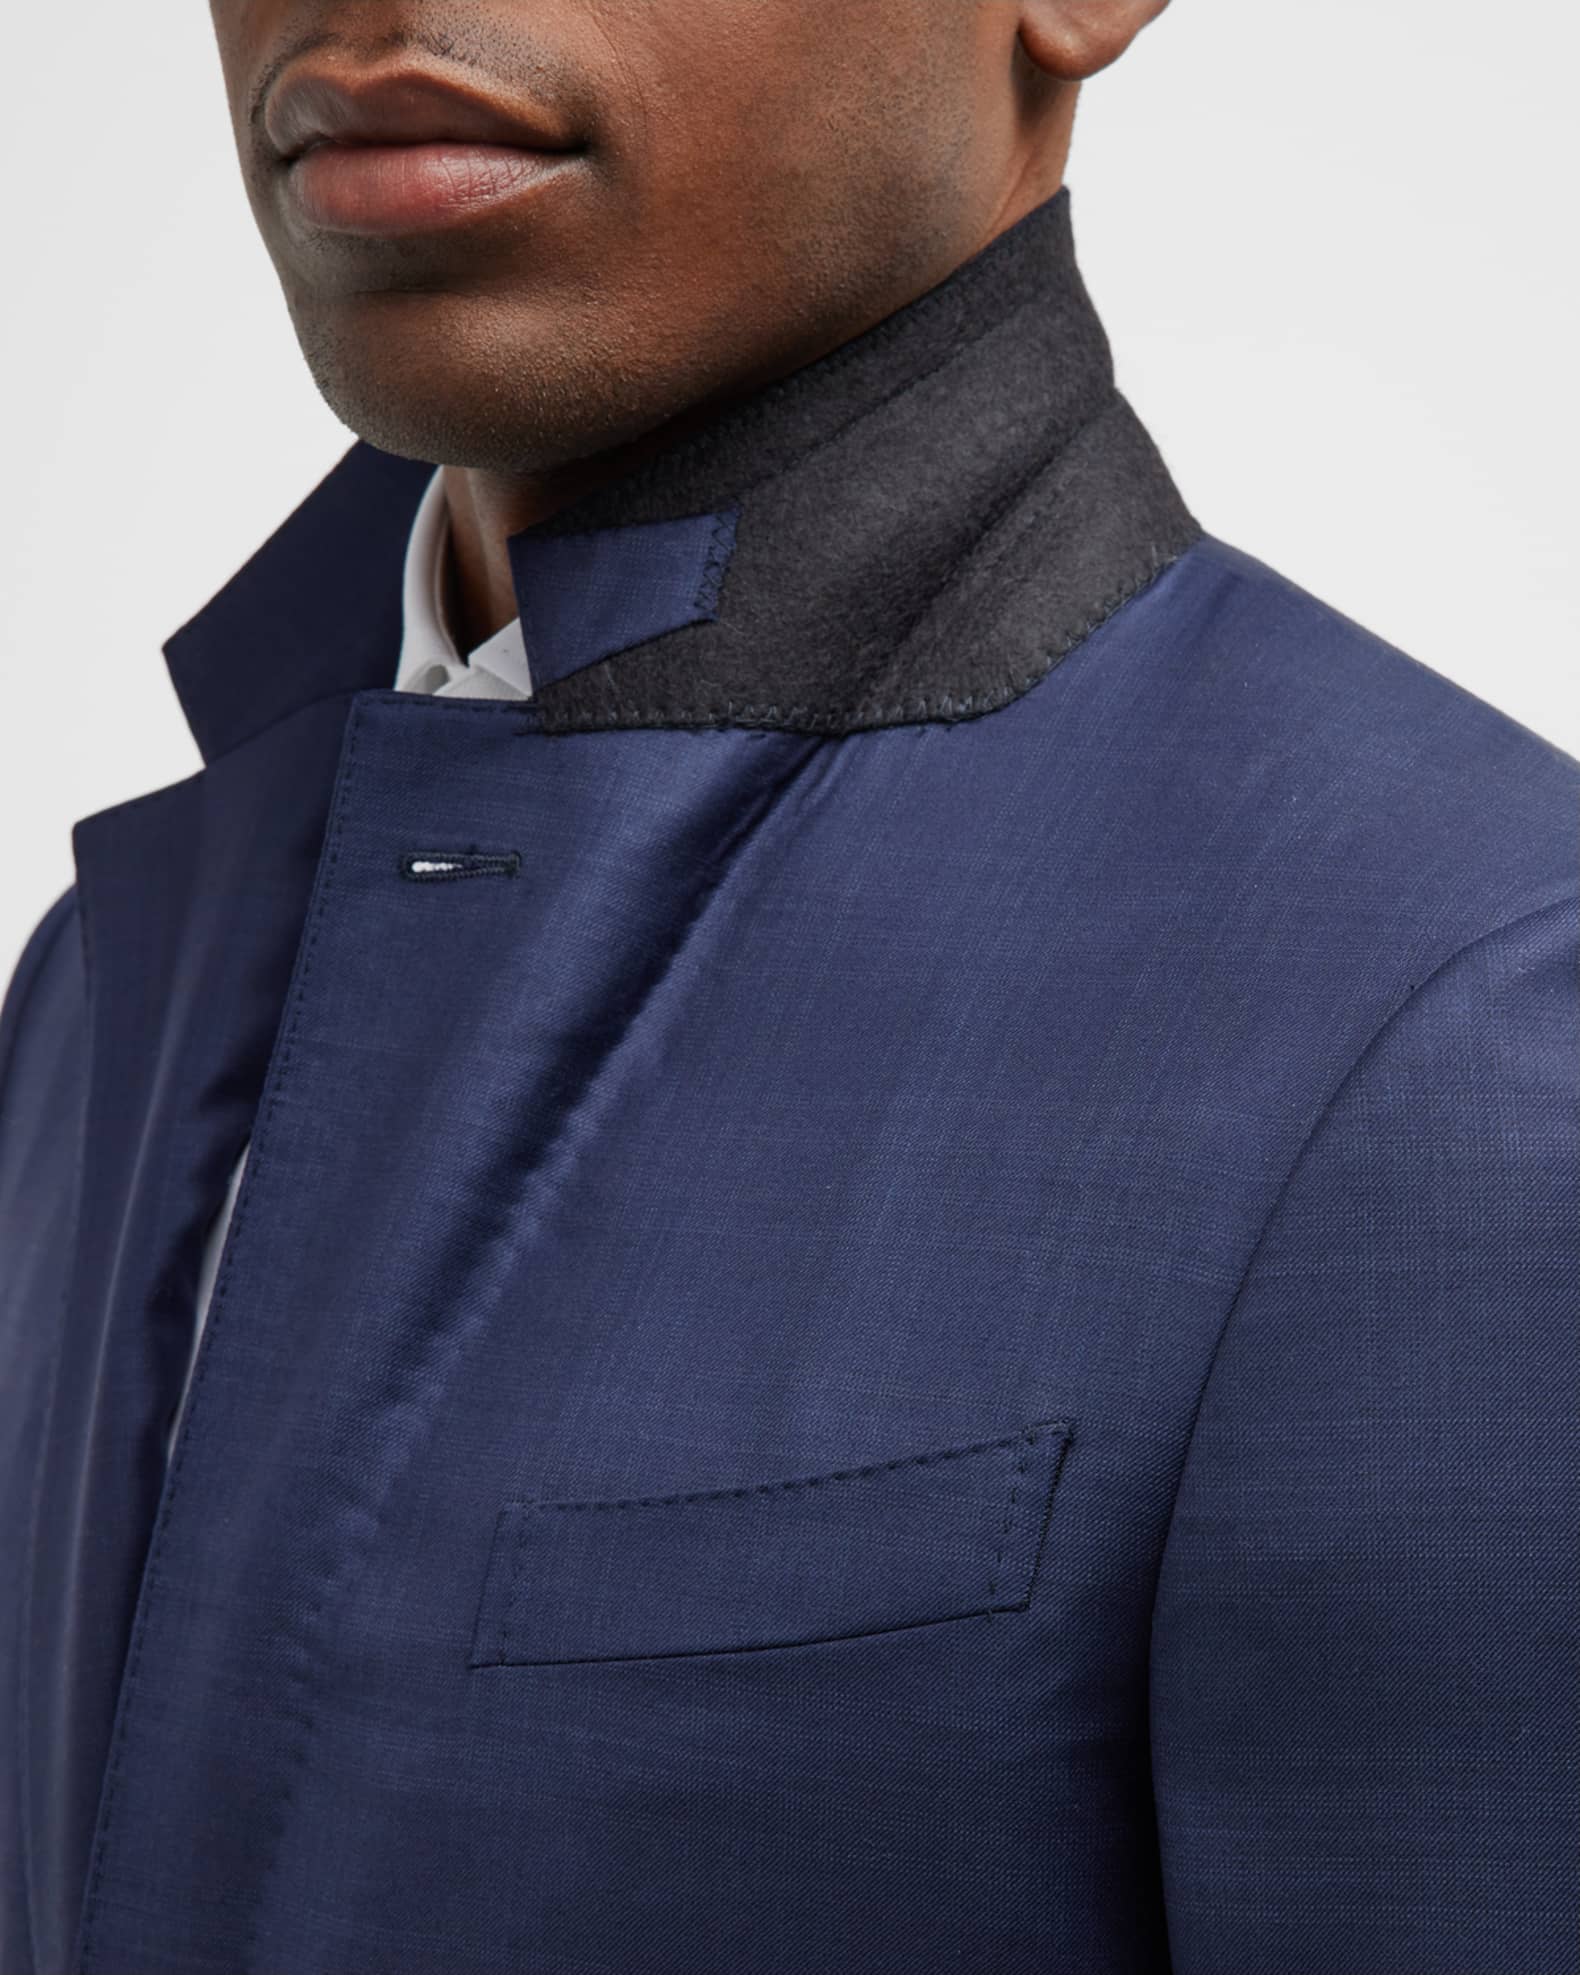 ZEGNA Men's Tonal Plaid Wool-Silk Suit | Neiman Marcus